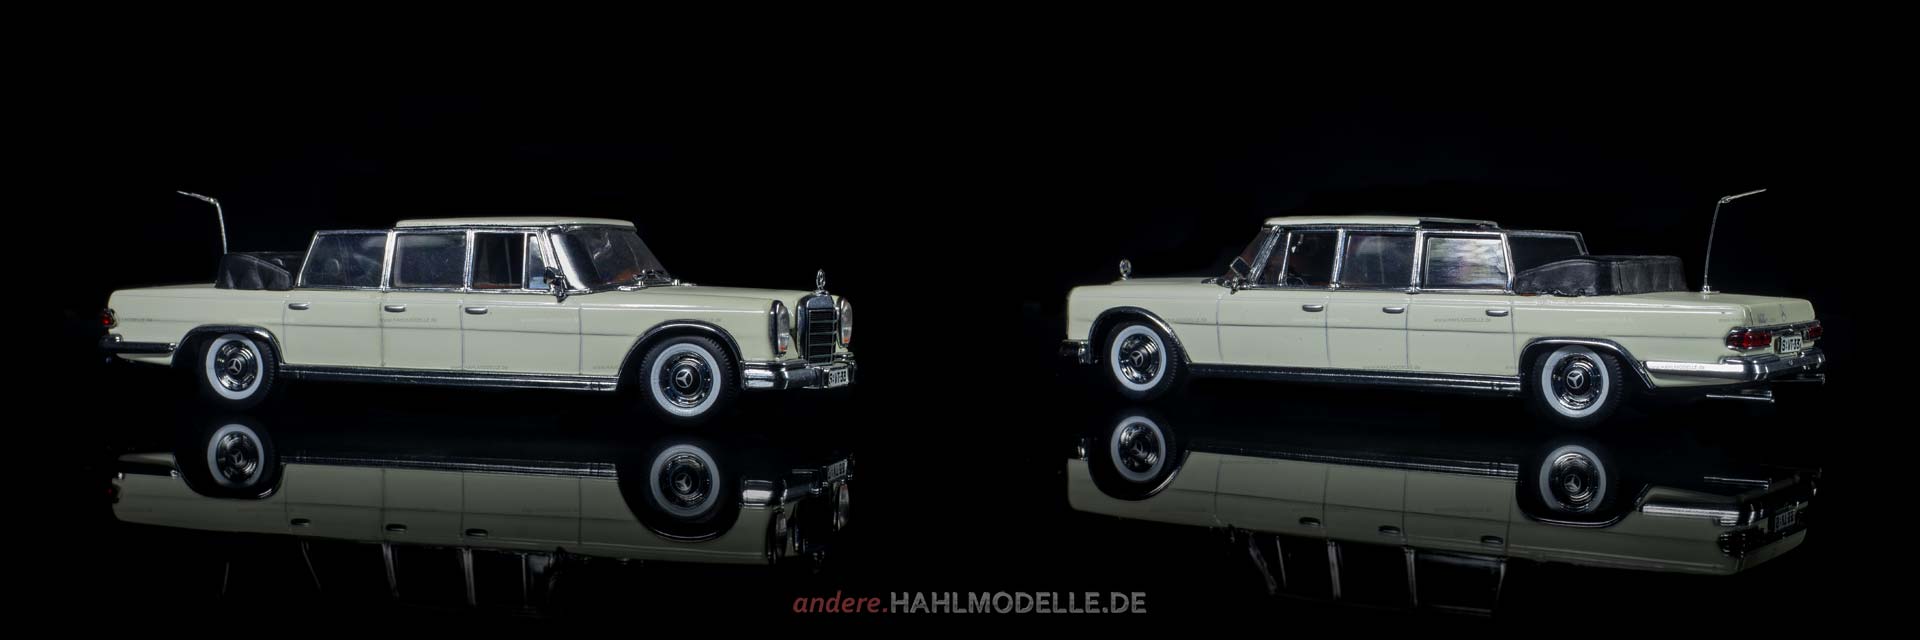 Mercedes-Benz 600 (W 100) | Landaulet | Vitesse | www.andere.hahlmodelle.de